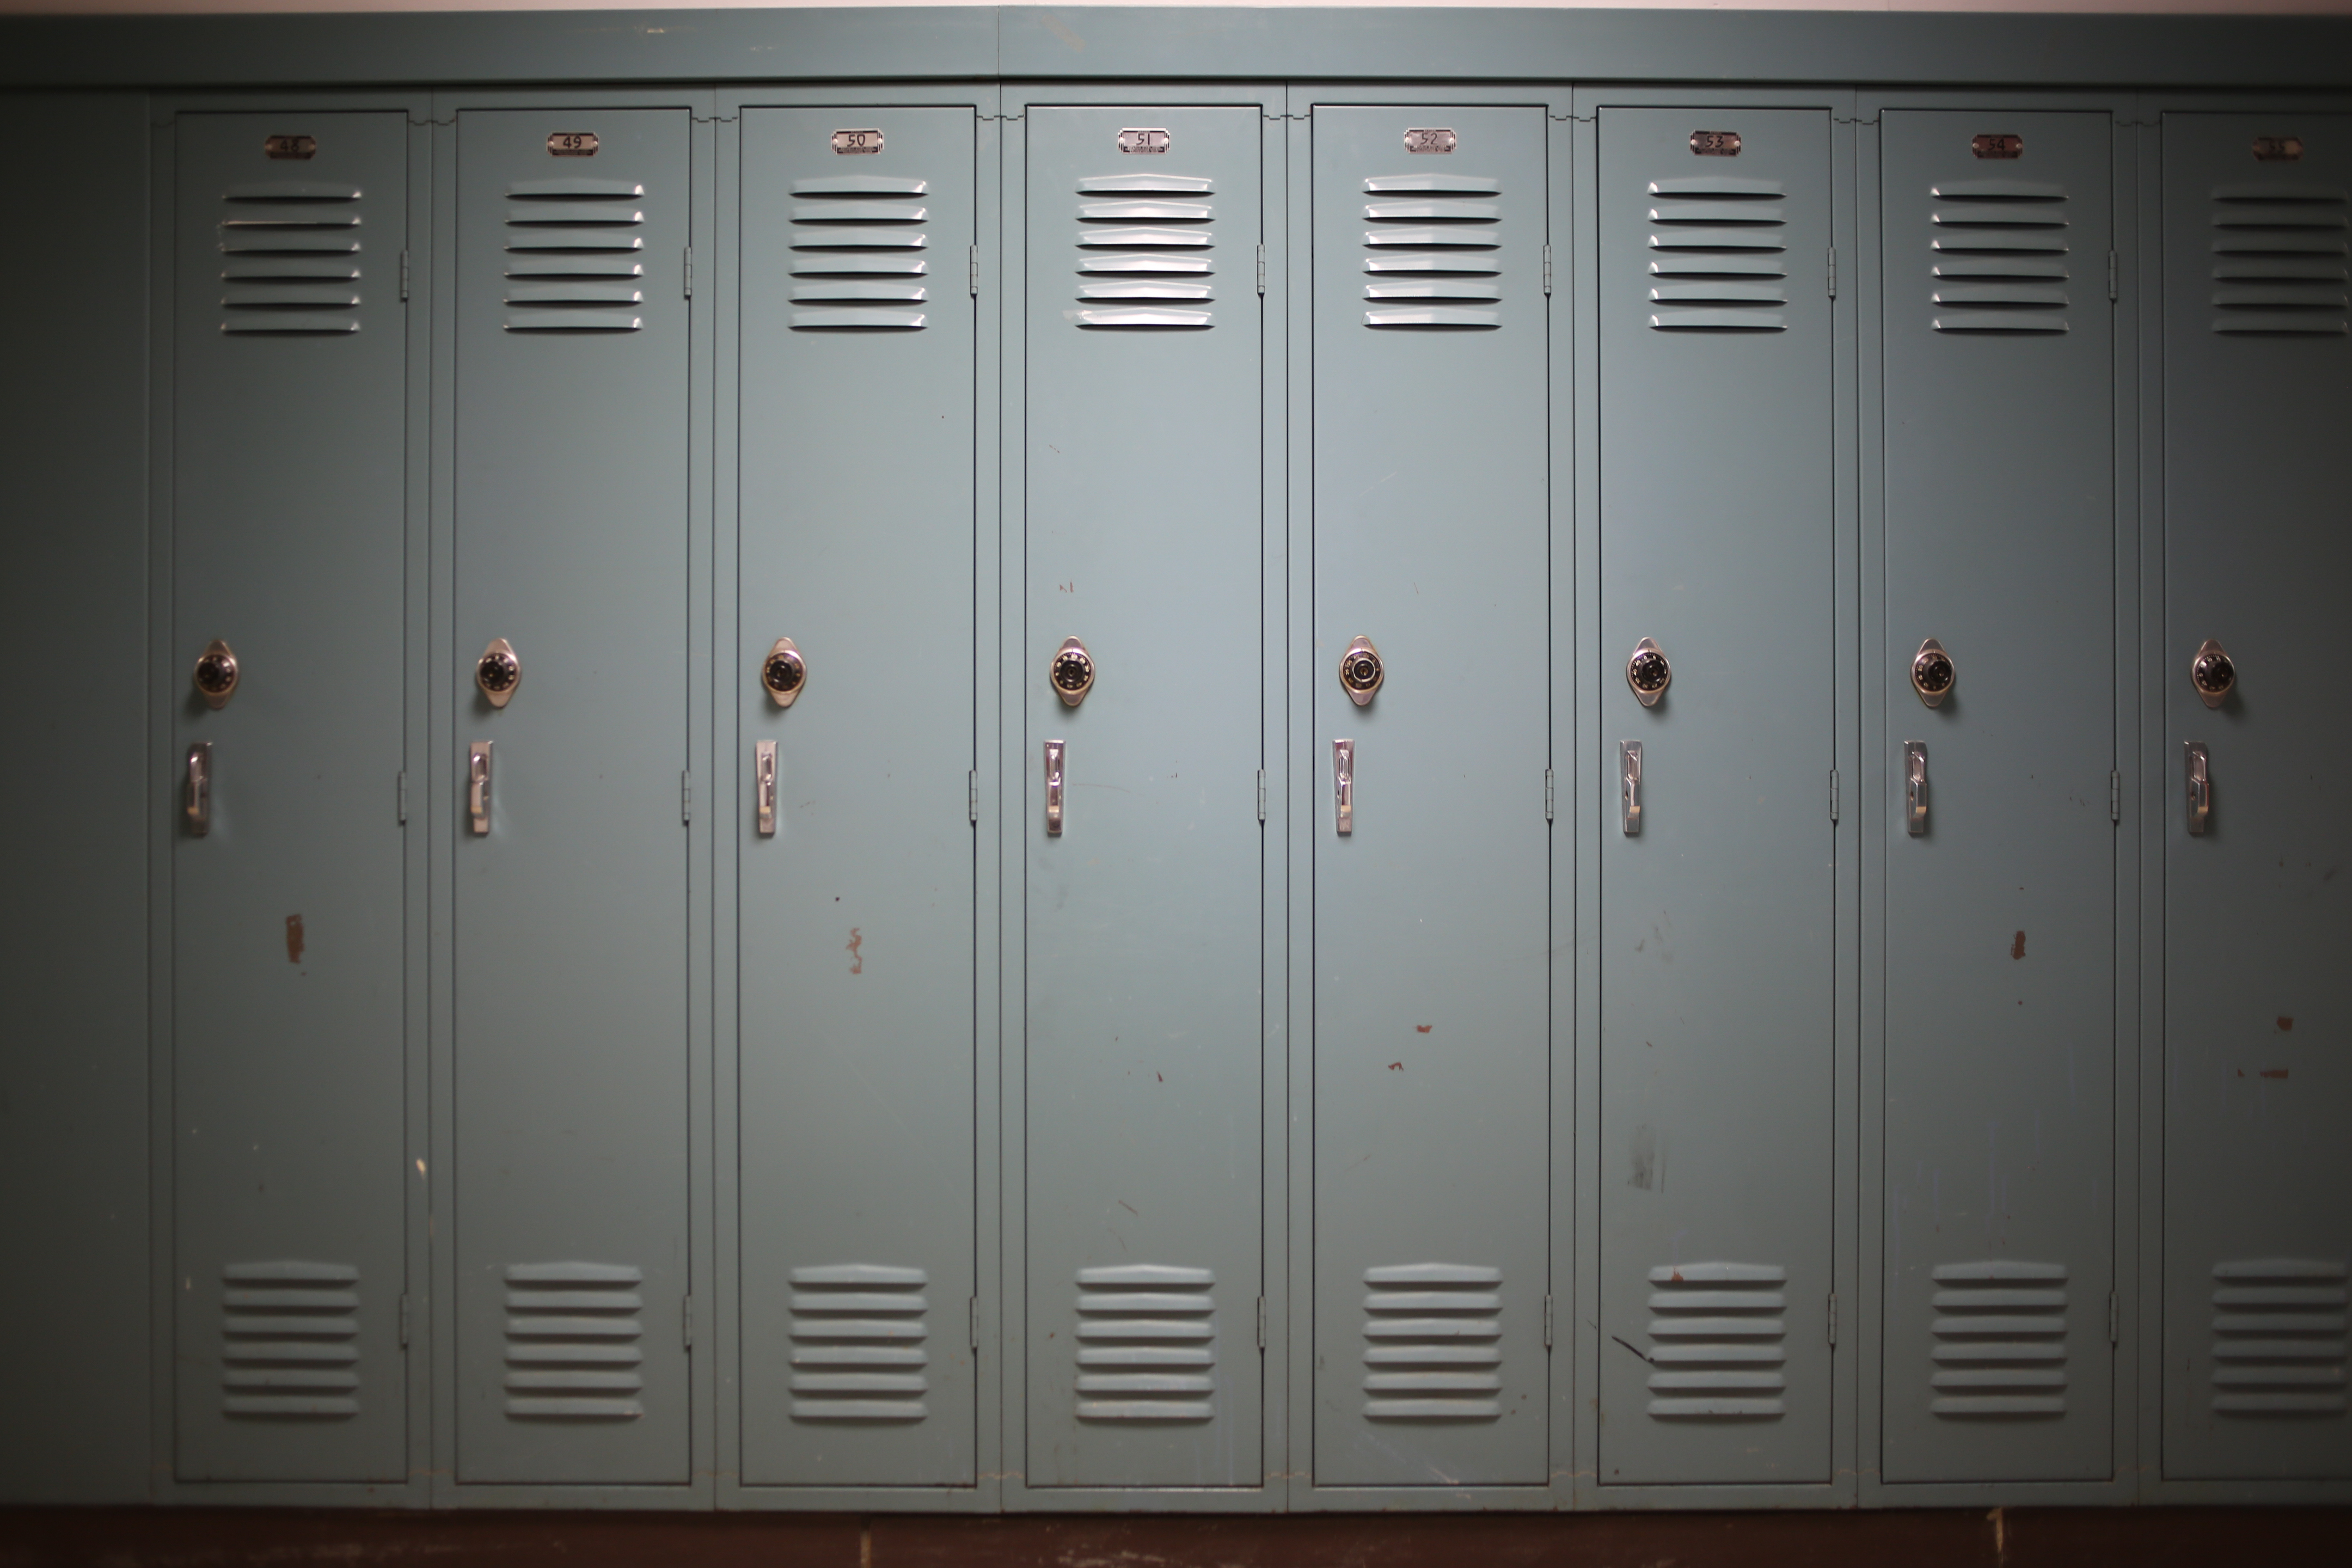 Washington Examiner's Chris Tremoglie on MontCo Middle School Controversy... Why Is Assaliant's Gender Identity Untouchable?